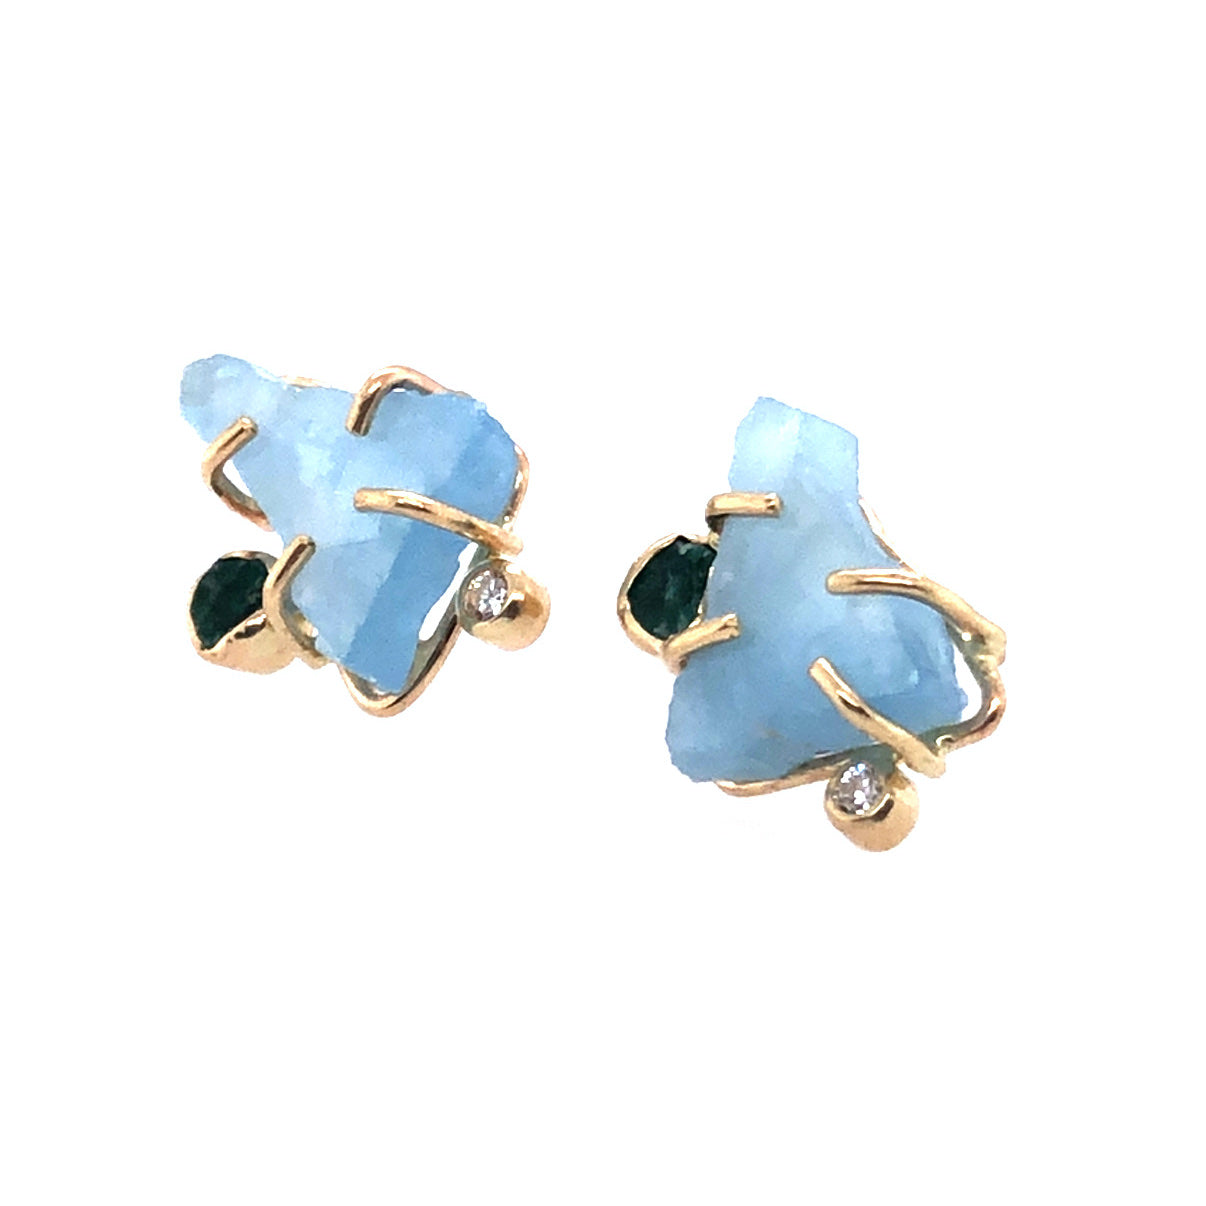 Aquamarine, Trapiche Emerald, and Diamond Gold Stud Earrings